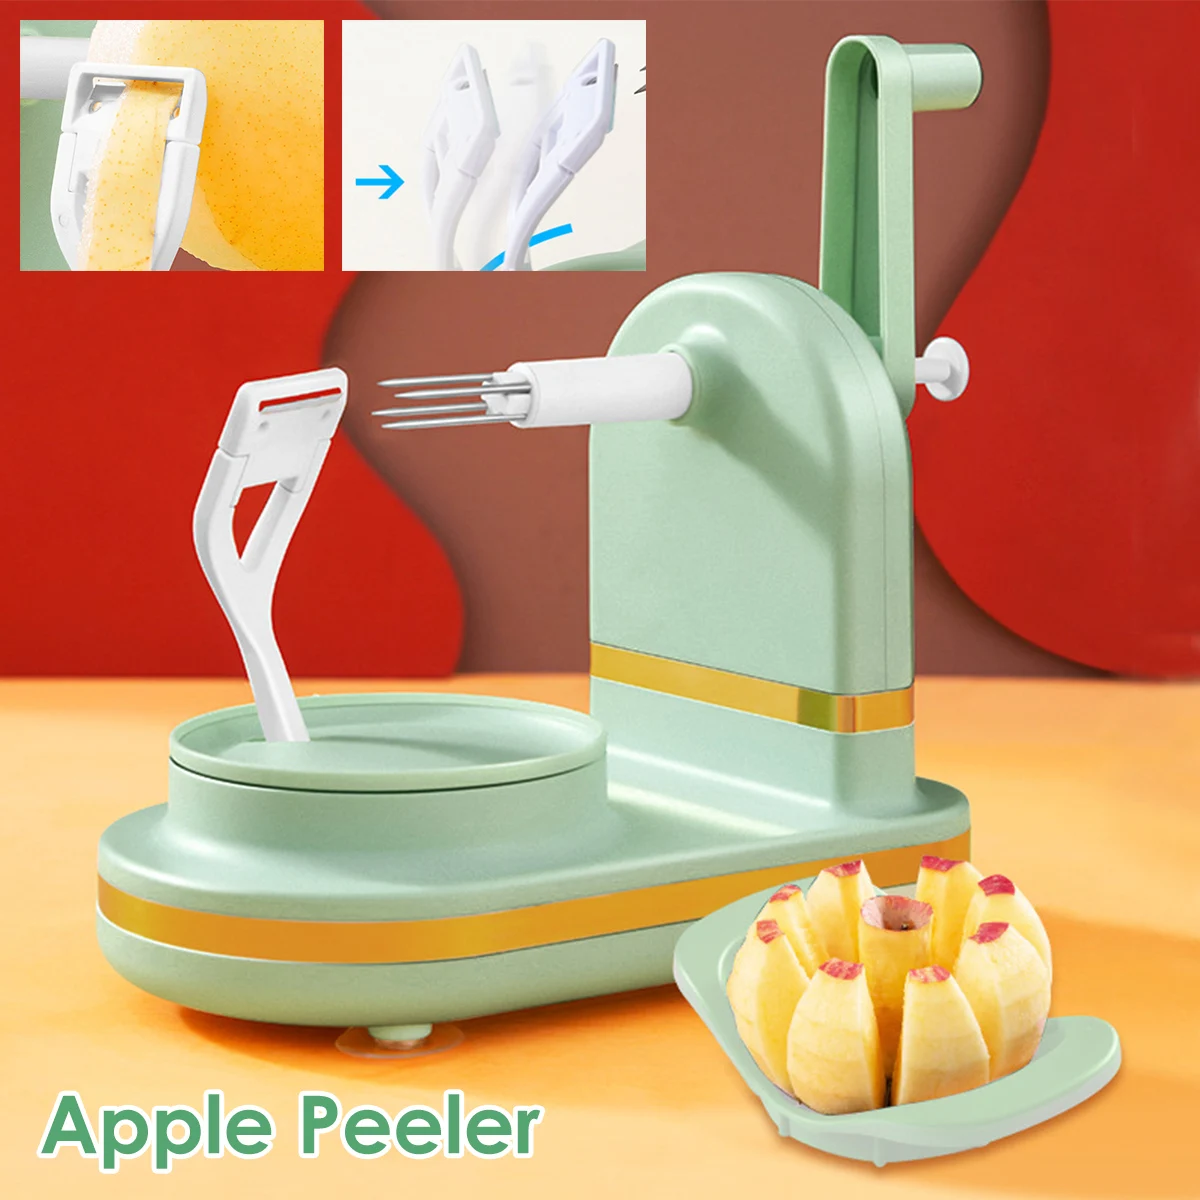 Apple Peeler Hand Crank Fruit Peeler Apple Peeler Cutter Slicer Food Crusher Peeling Machine Tools Kitchen Accessories Gadgets